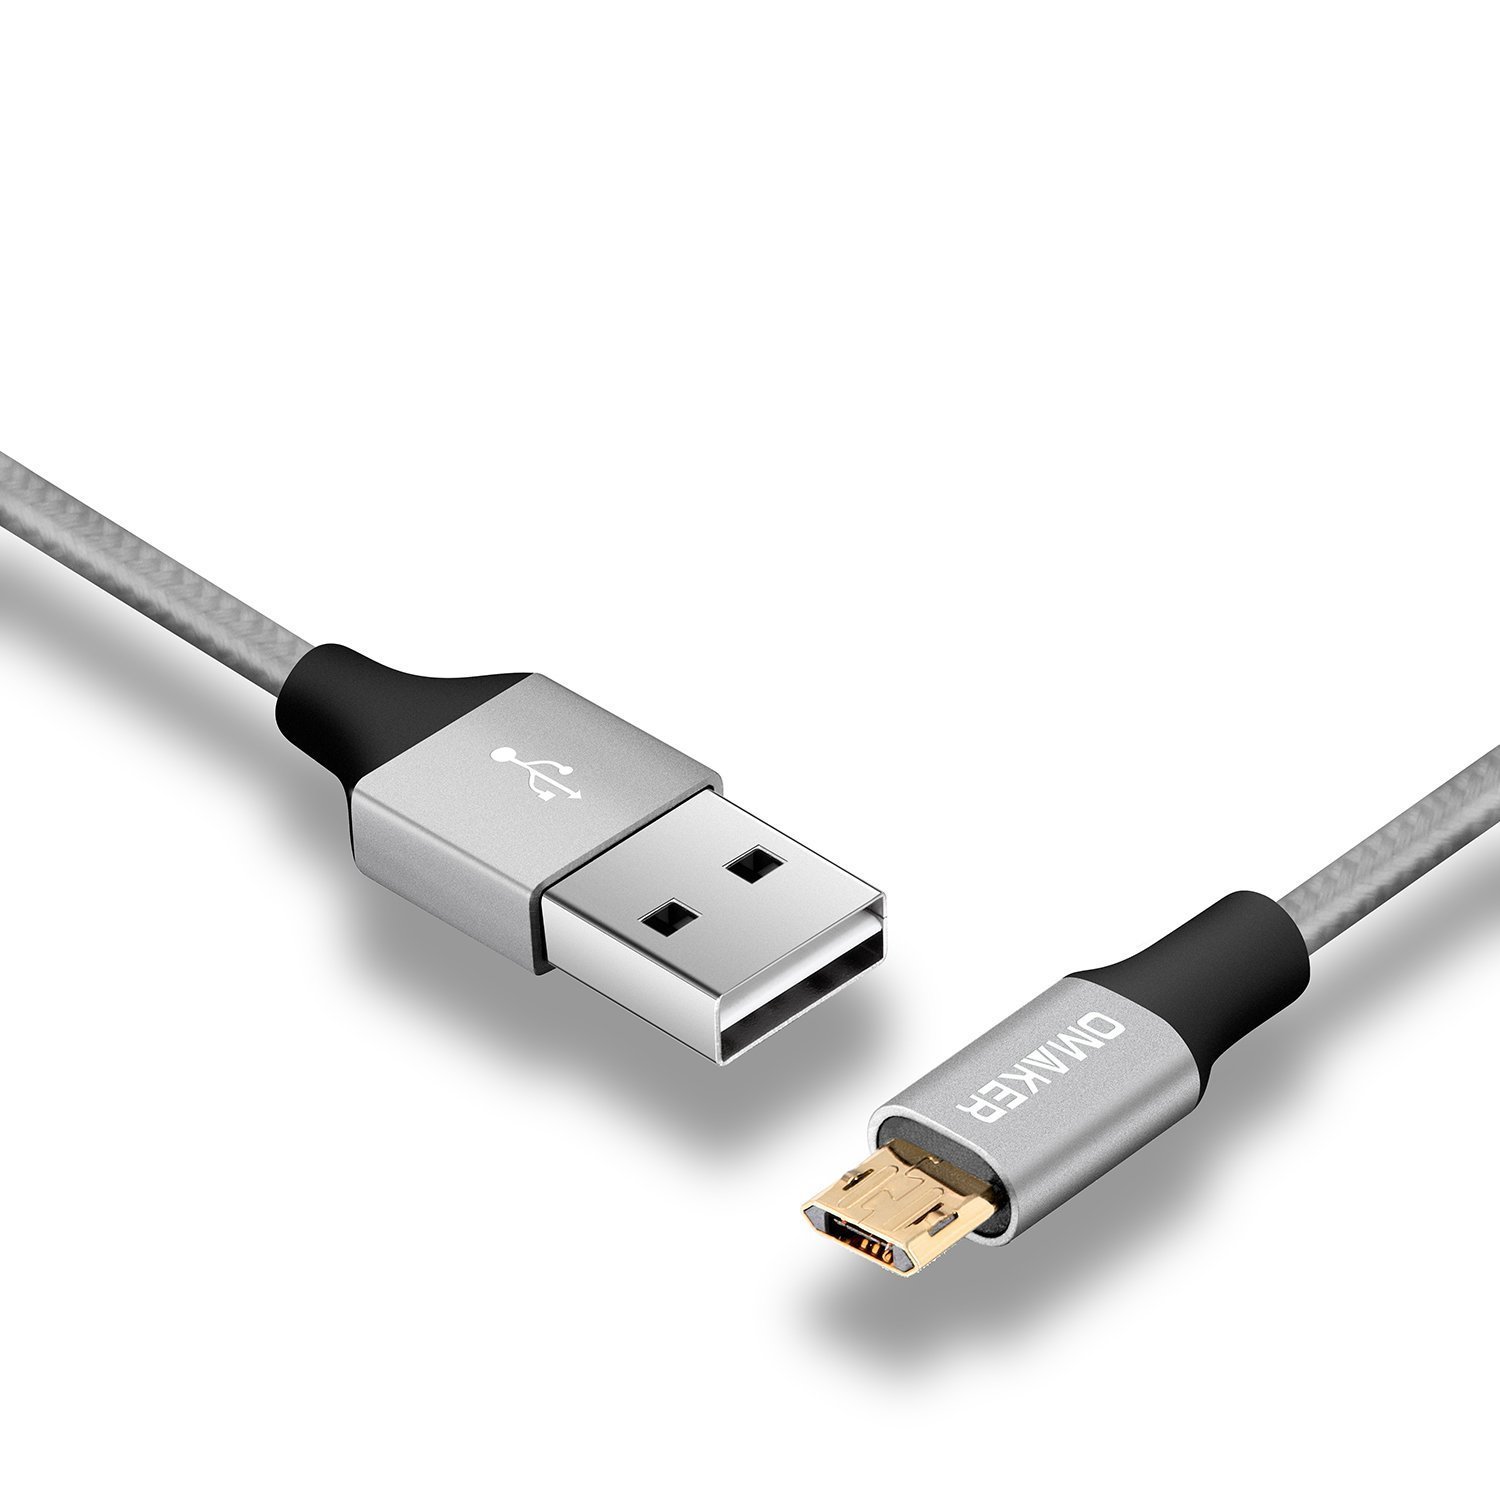 Usb connection. Кабель для зарядки Xiaomi USB/Micro USB. Провод микро юсб боковой. SM-g900f кабель USB. Кабель USB-Micro USB 10 метров.